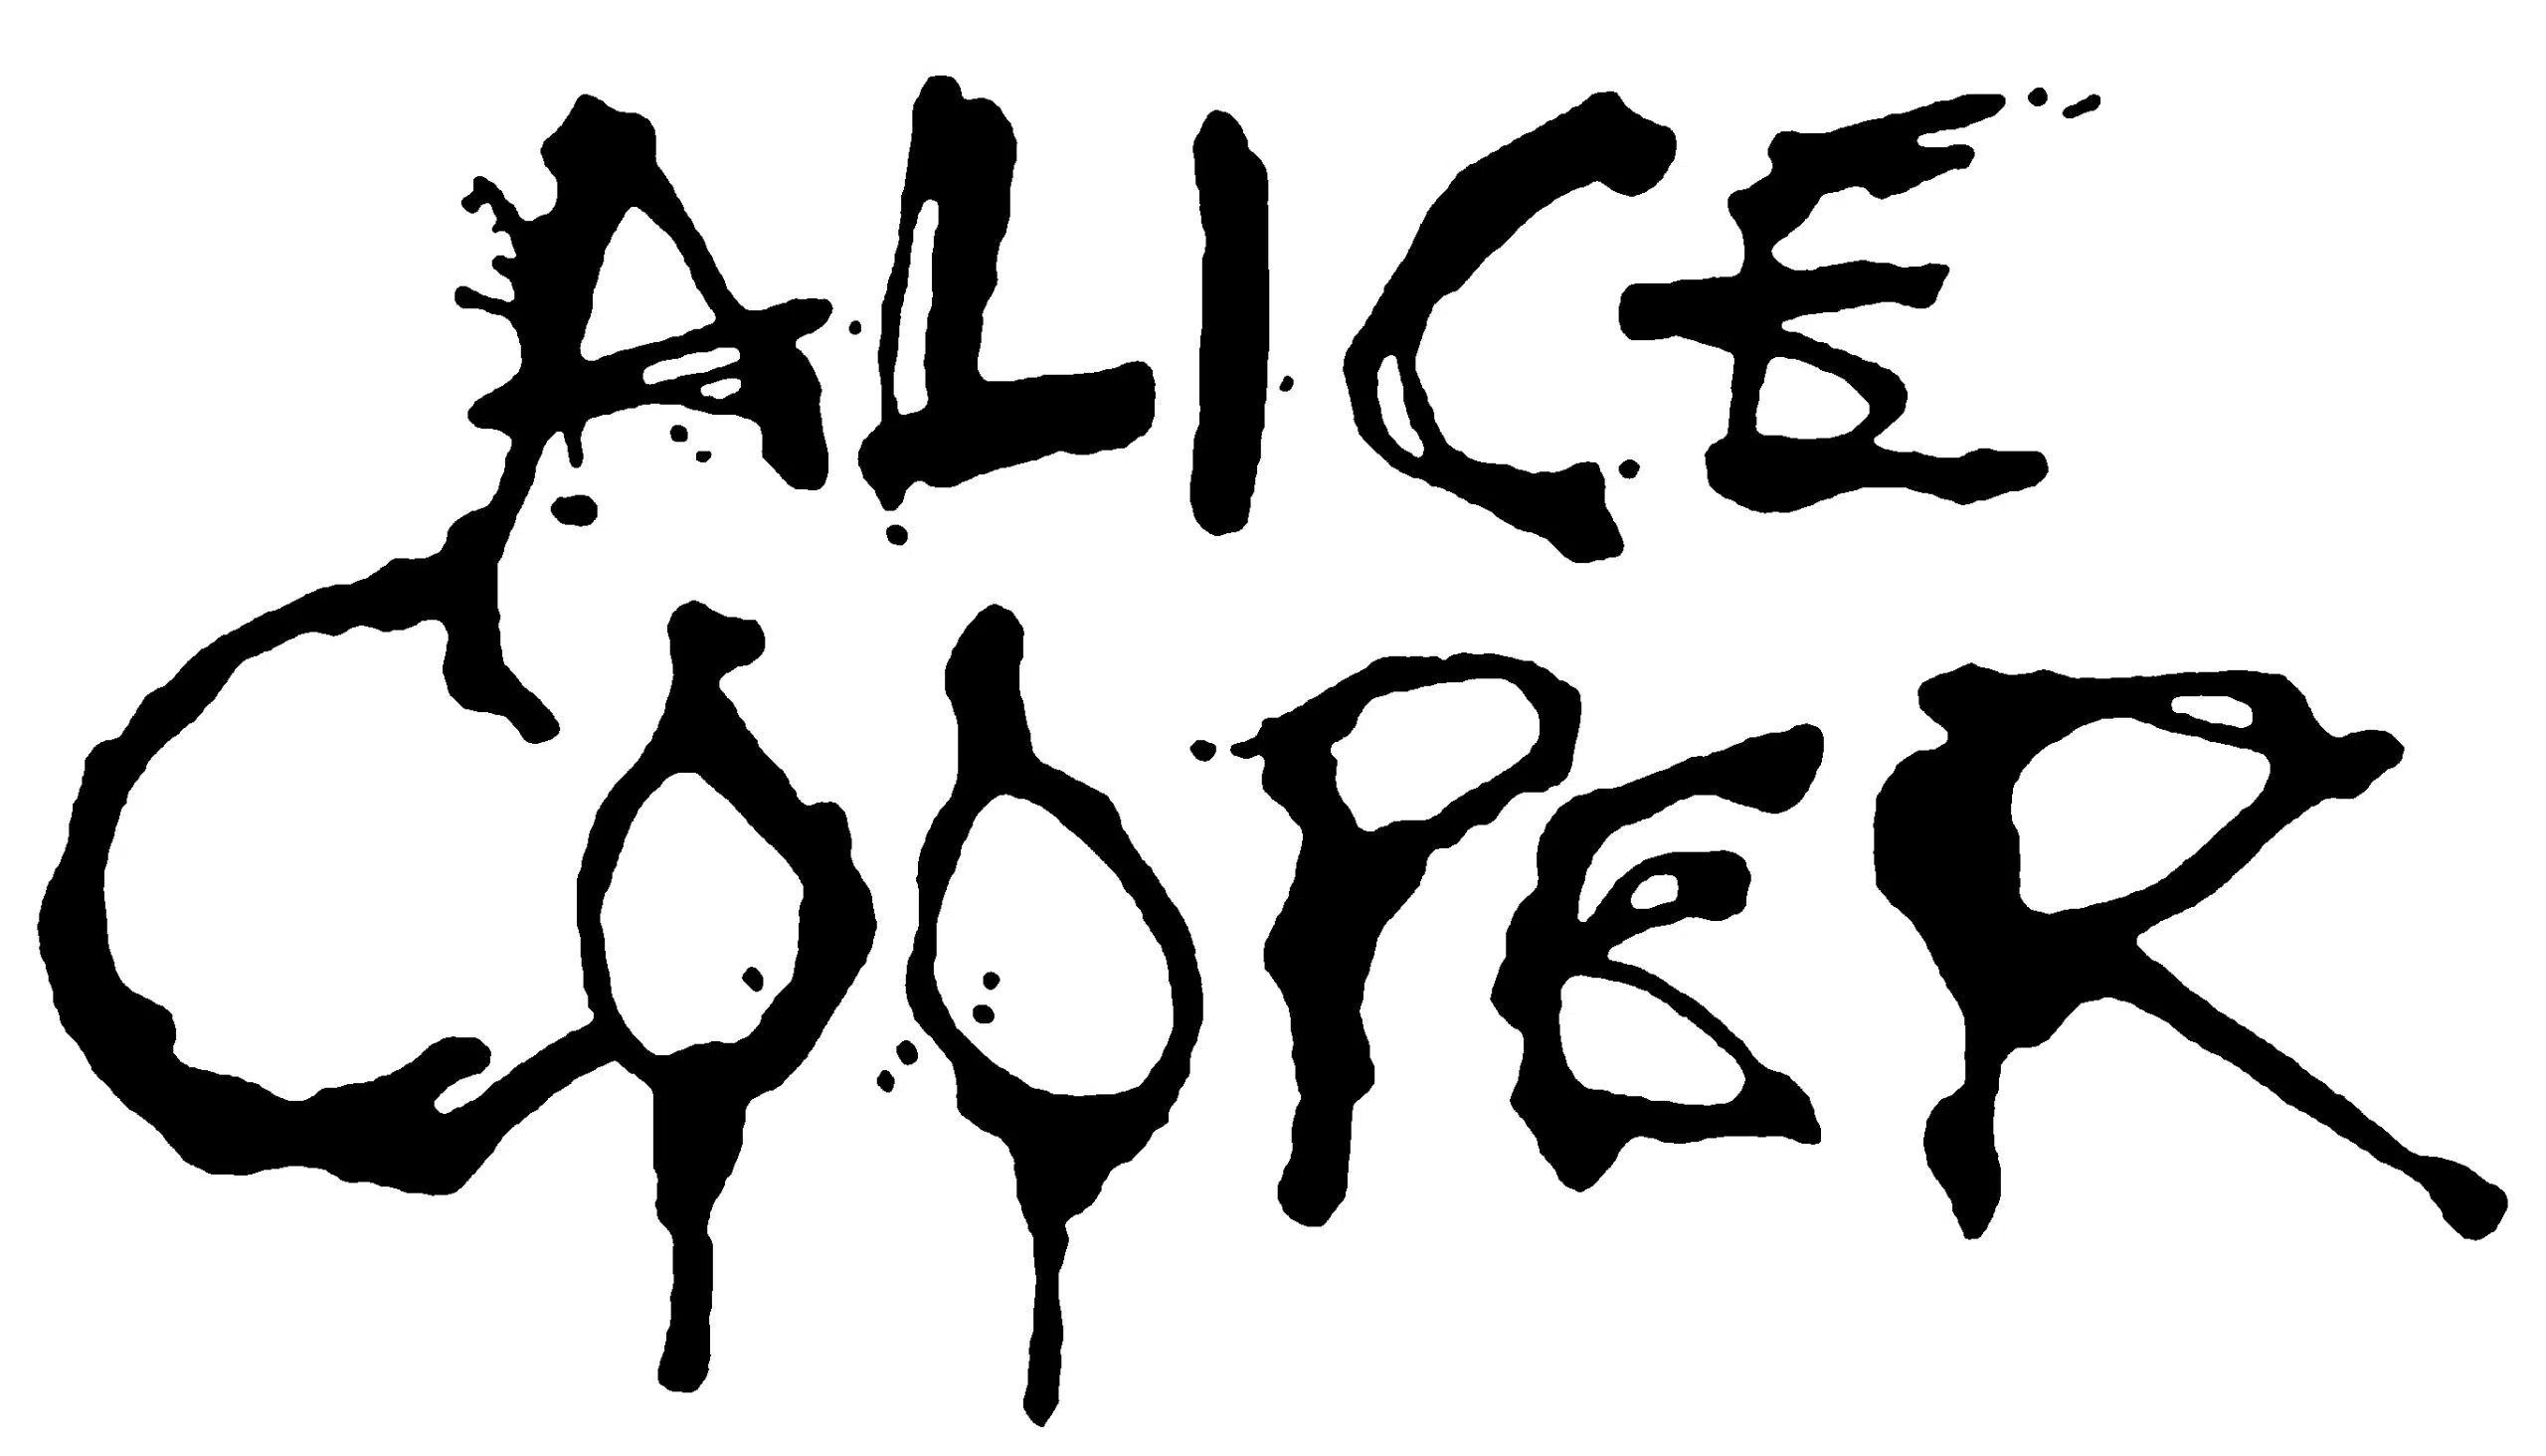 Alice Cooper To Release New Studio Album Paranormal On July 28 ft. Deep Purple, ZZ Top and U2 stars